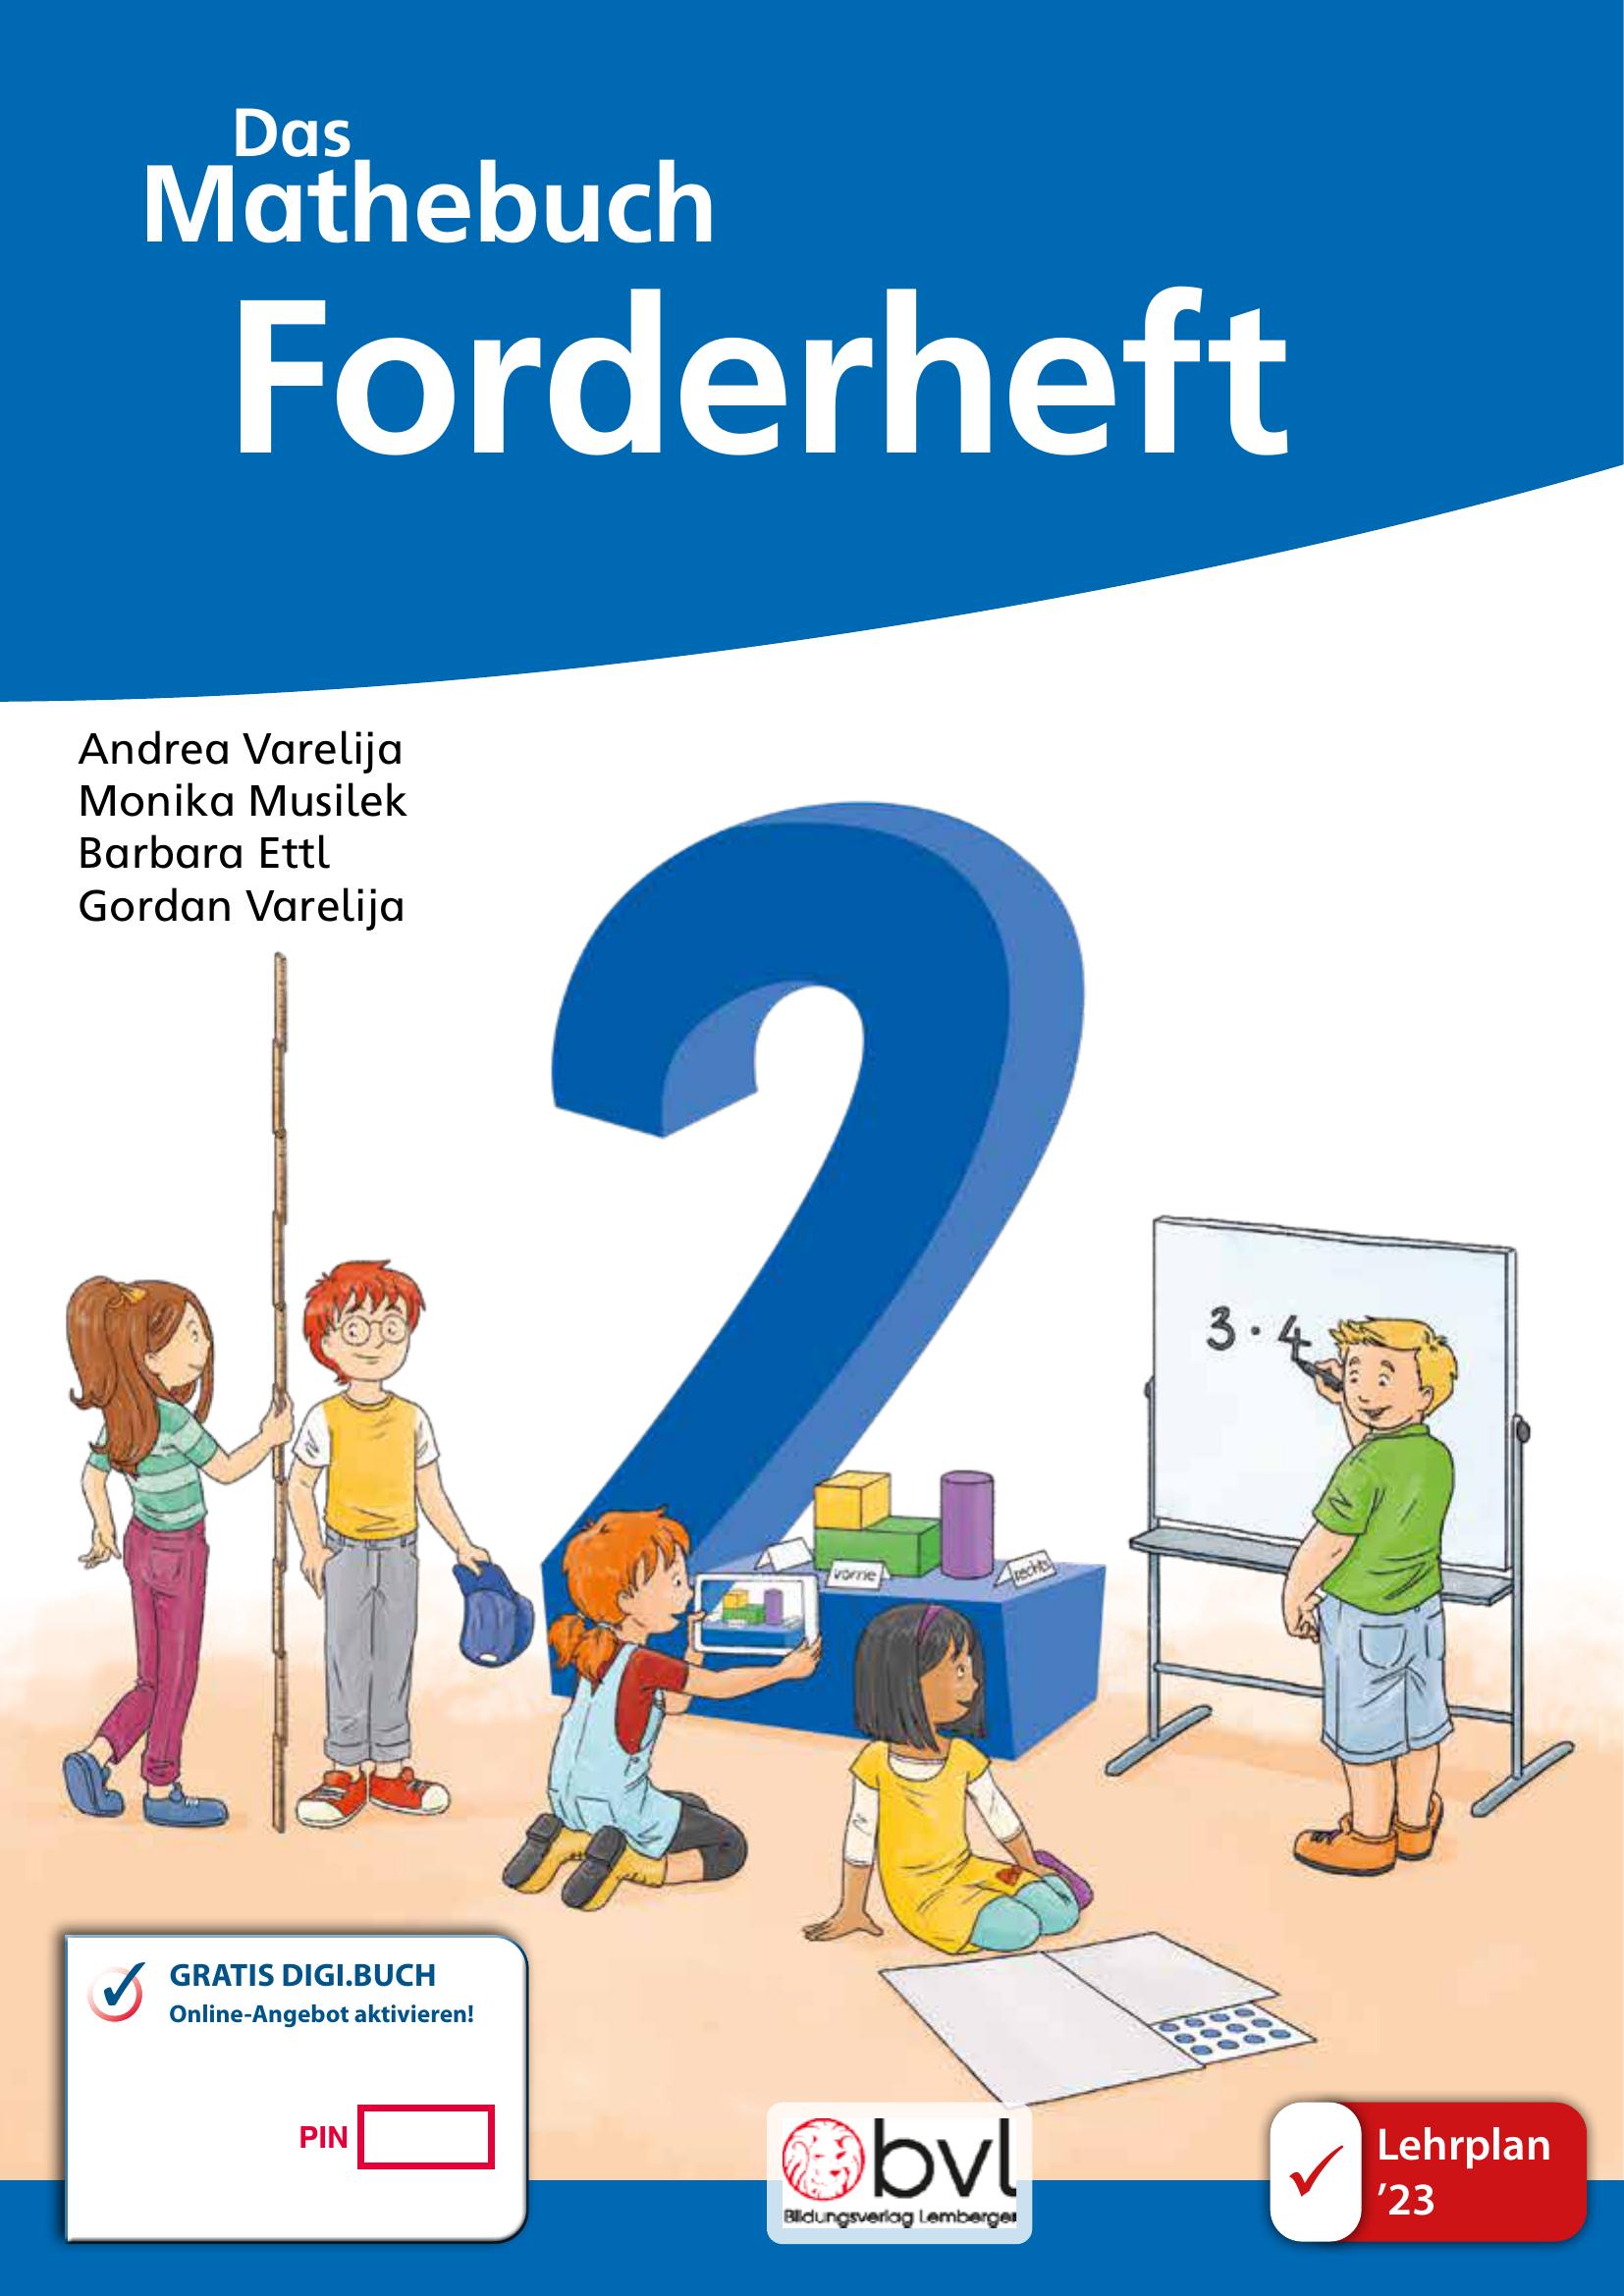 DAS Mathebuch 2 LP’23 v1.1 / Forderheft